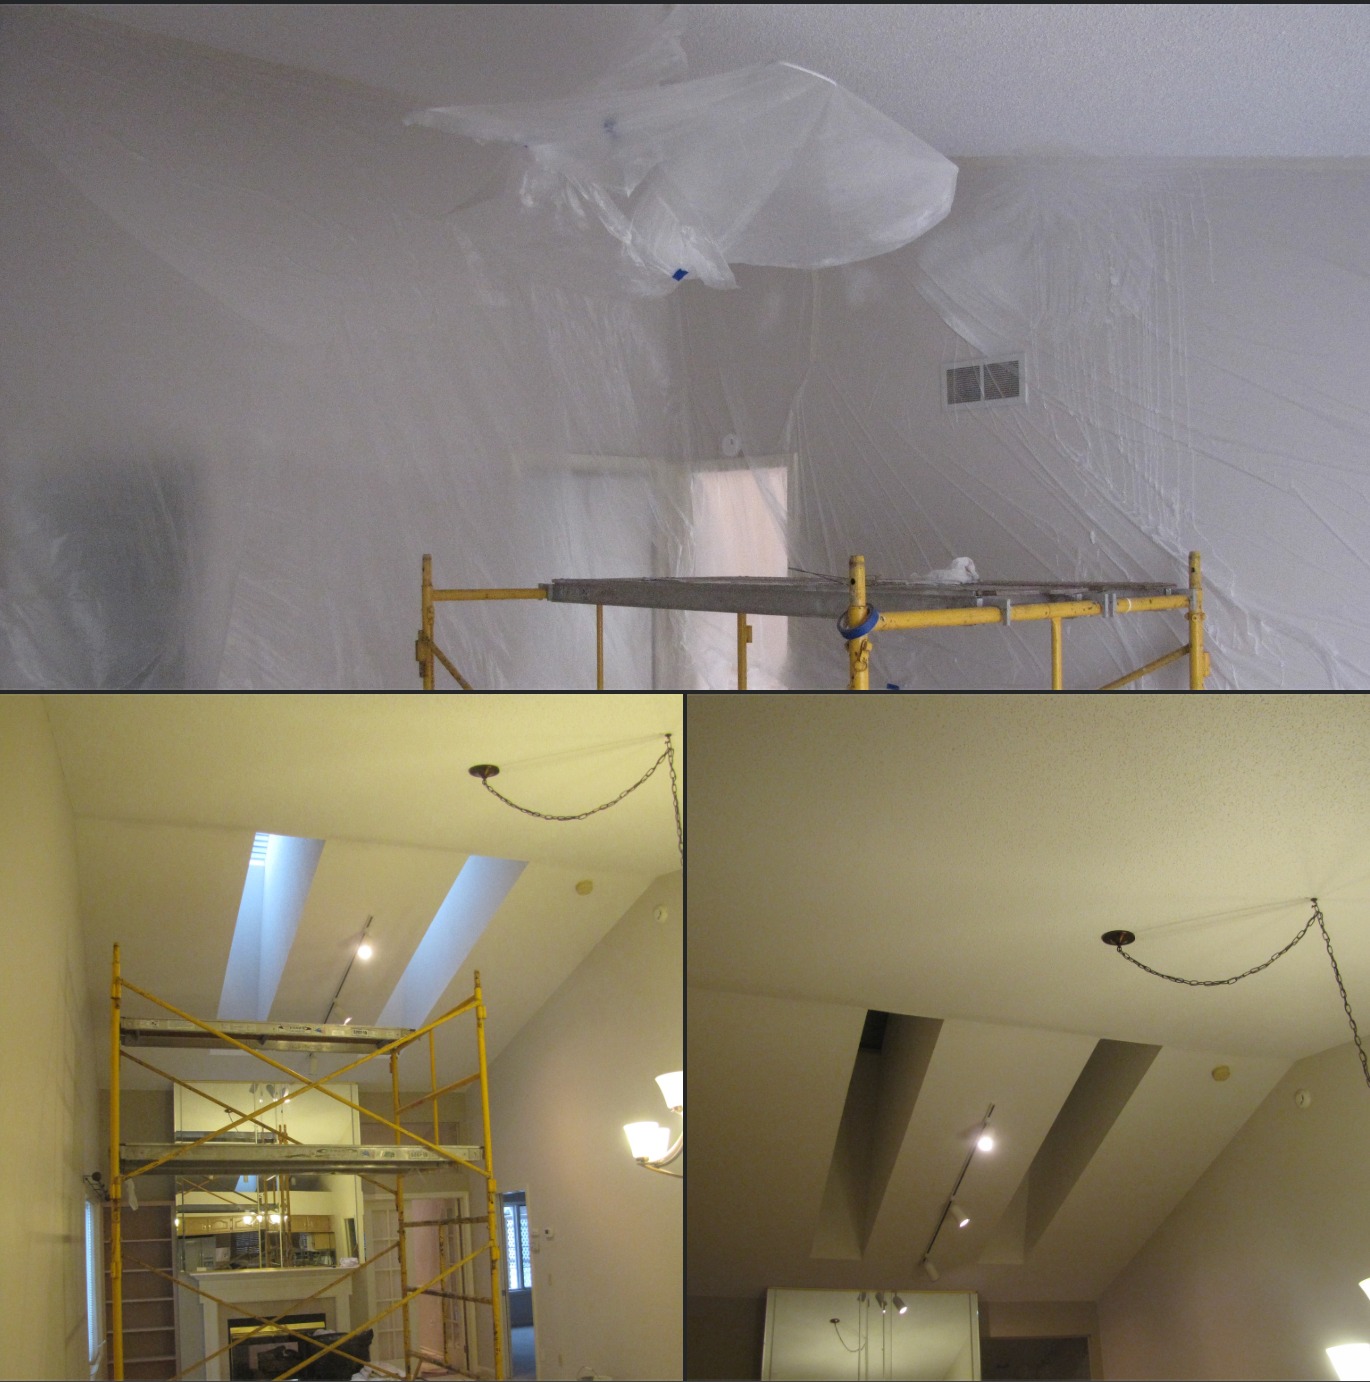 Carrigan Painting portfolio image of popcorn ceiling crack damage in East Amherst, NY